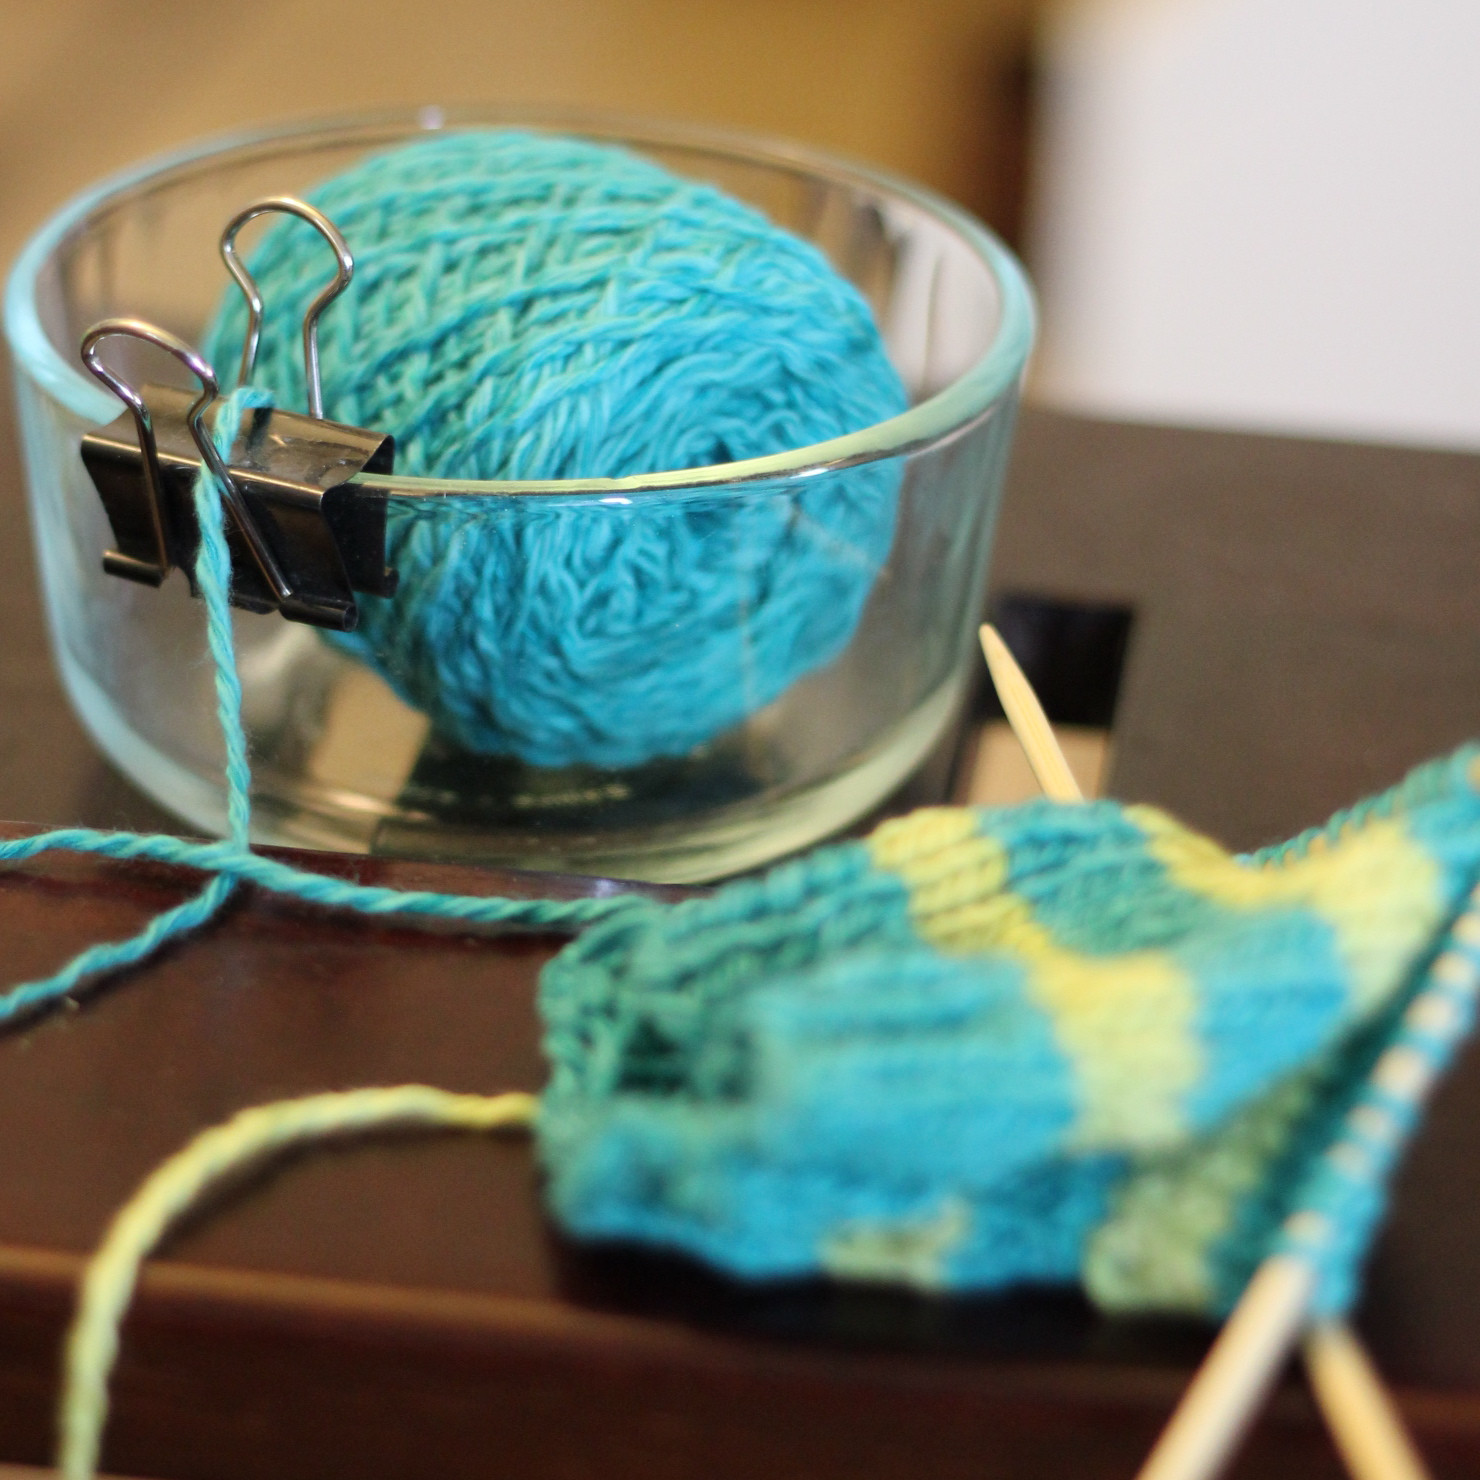 Best ideas about Yarn Bowl DIY
. Save or Pin DIY Yarn Bowl – Pocket Pause Now.